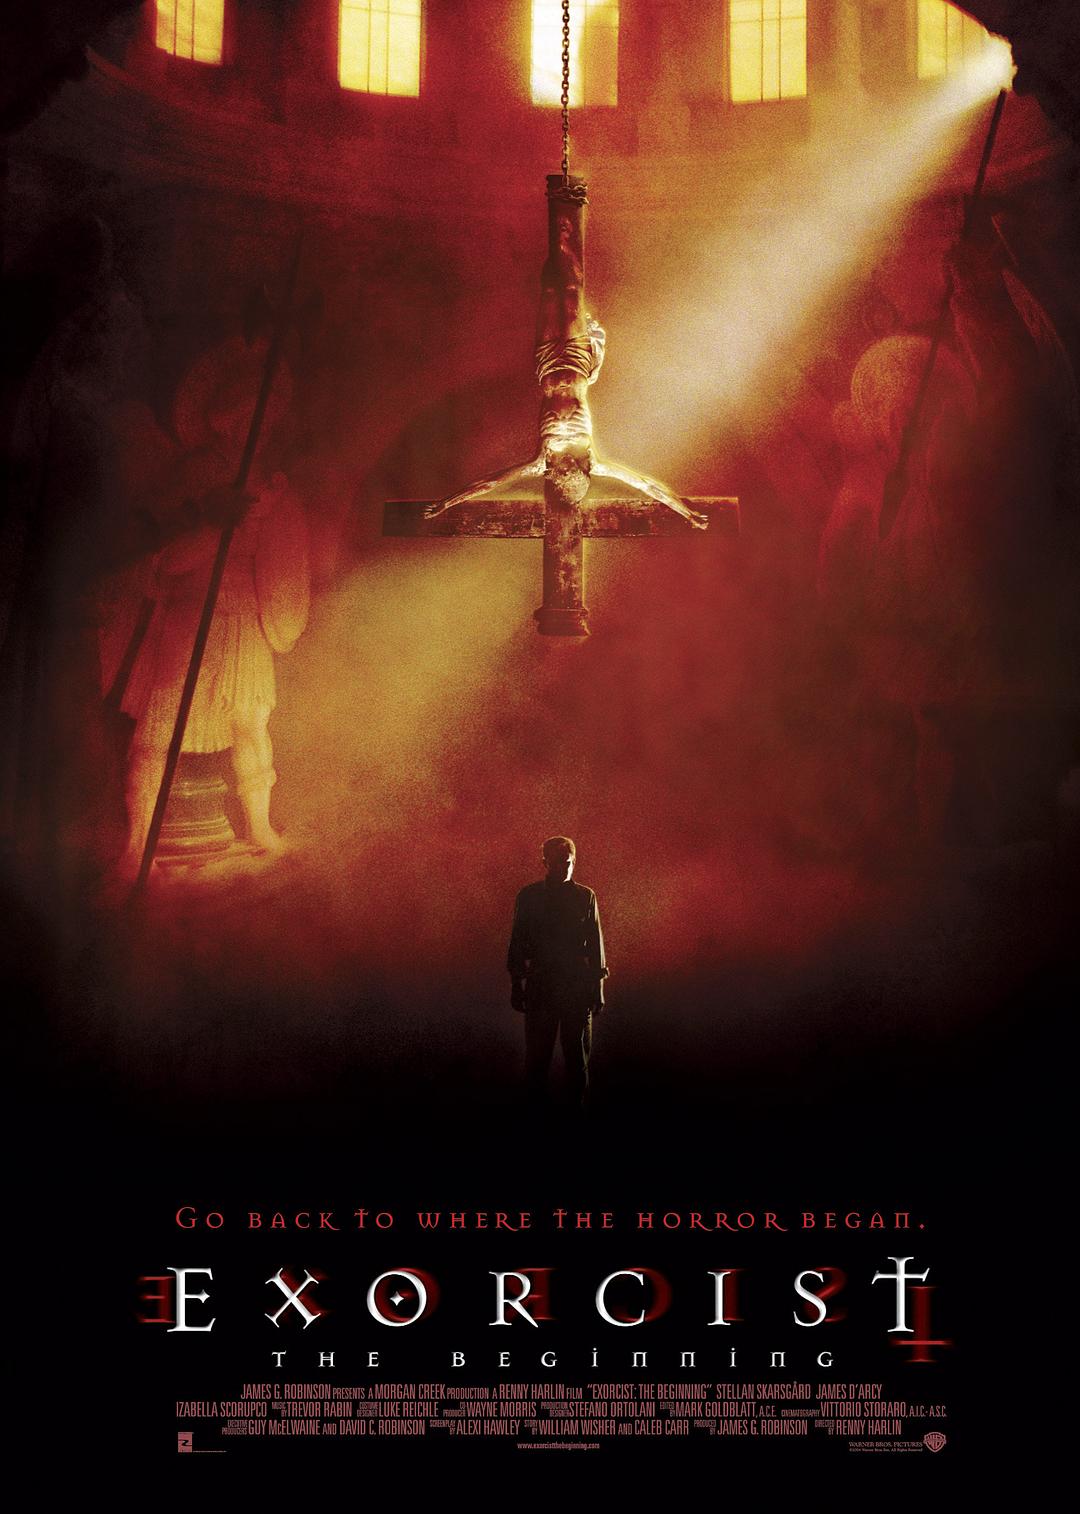 驱魔人前传/大法师: 吸魂首部曲 Exorcist.The.Beginning.2004.1080p.BluRay.x264-LCHD 7.64GB-1.png